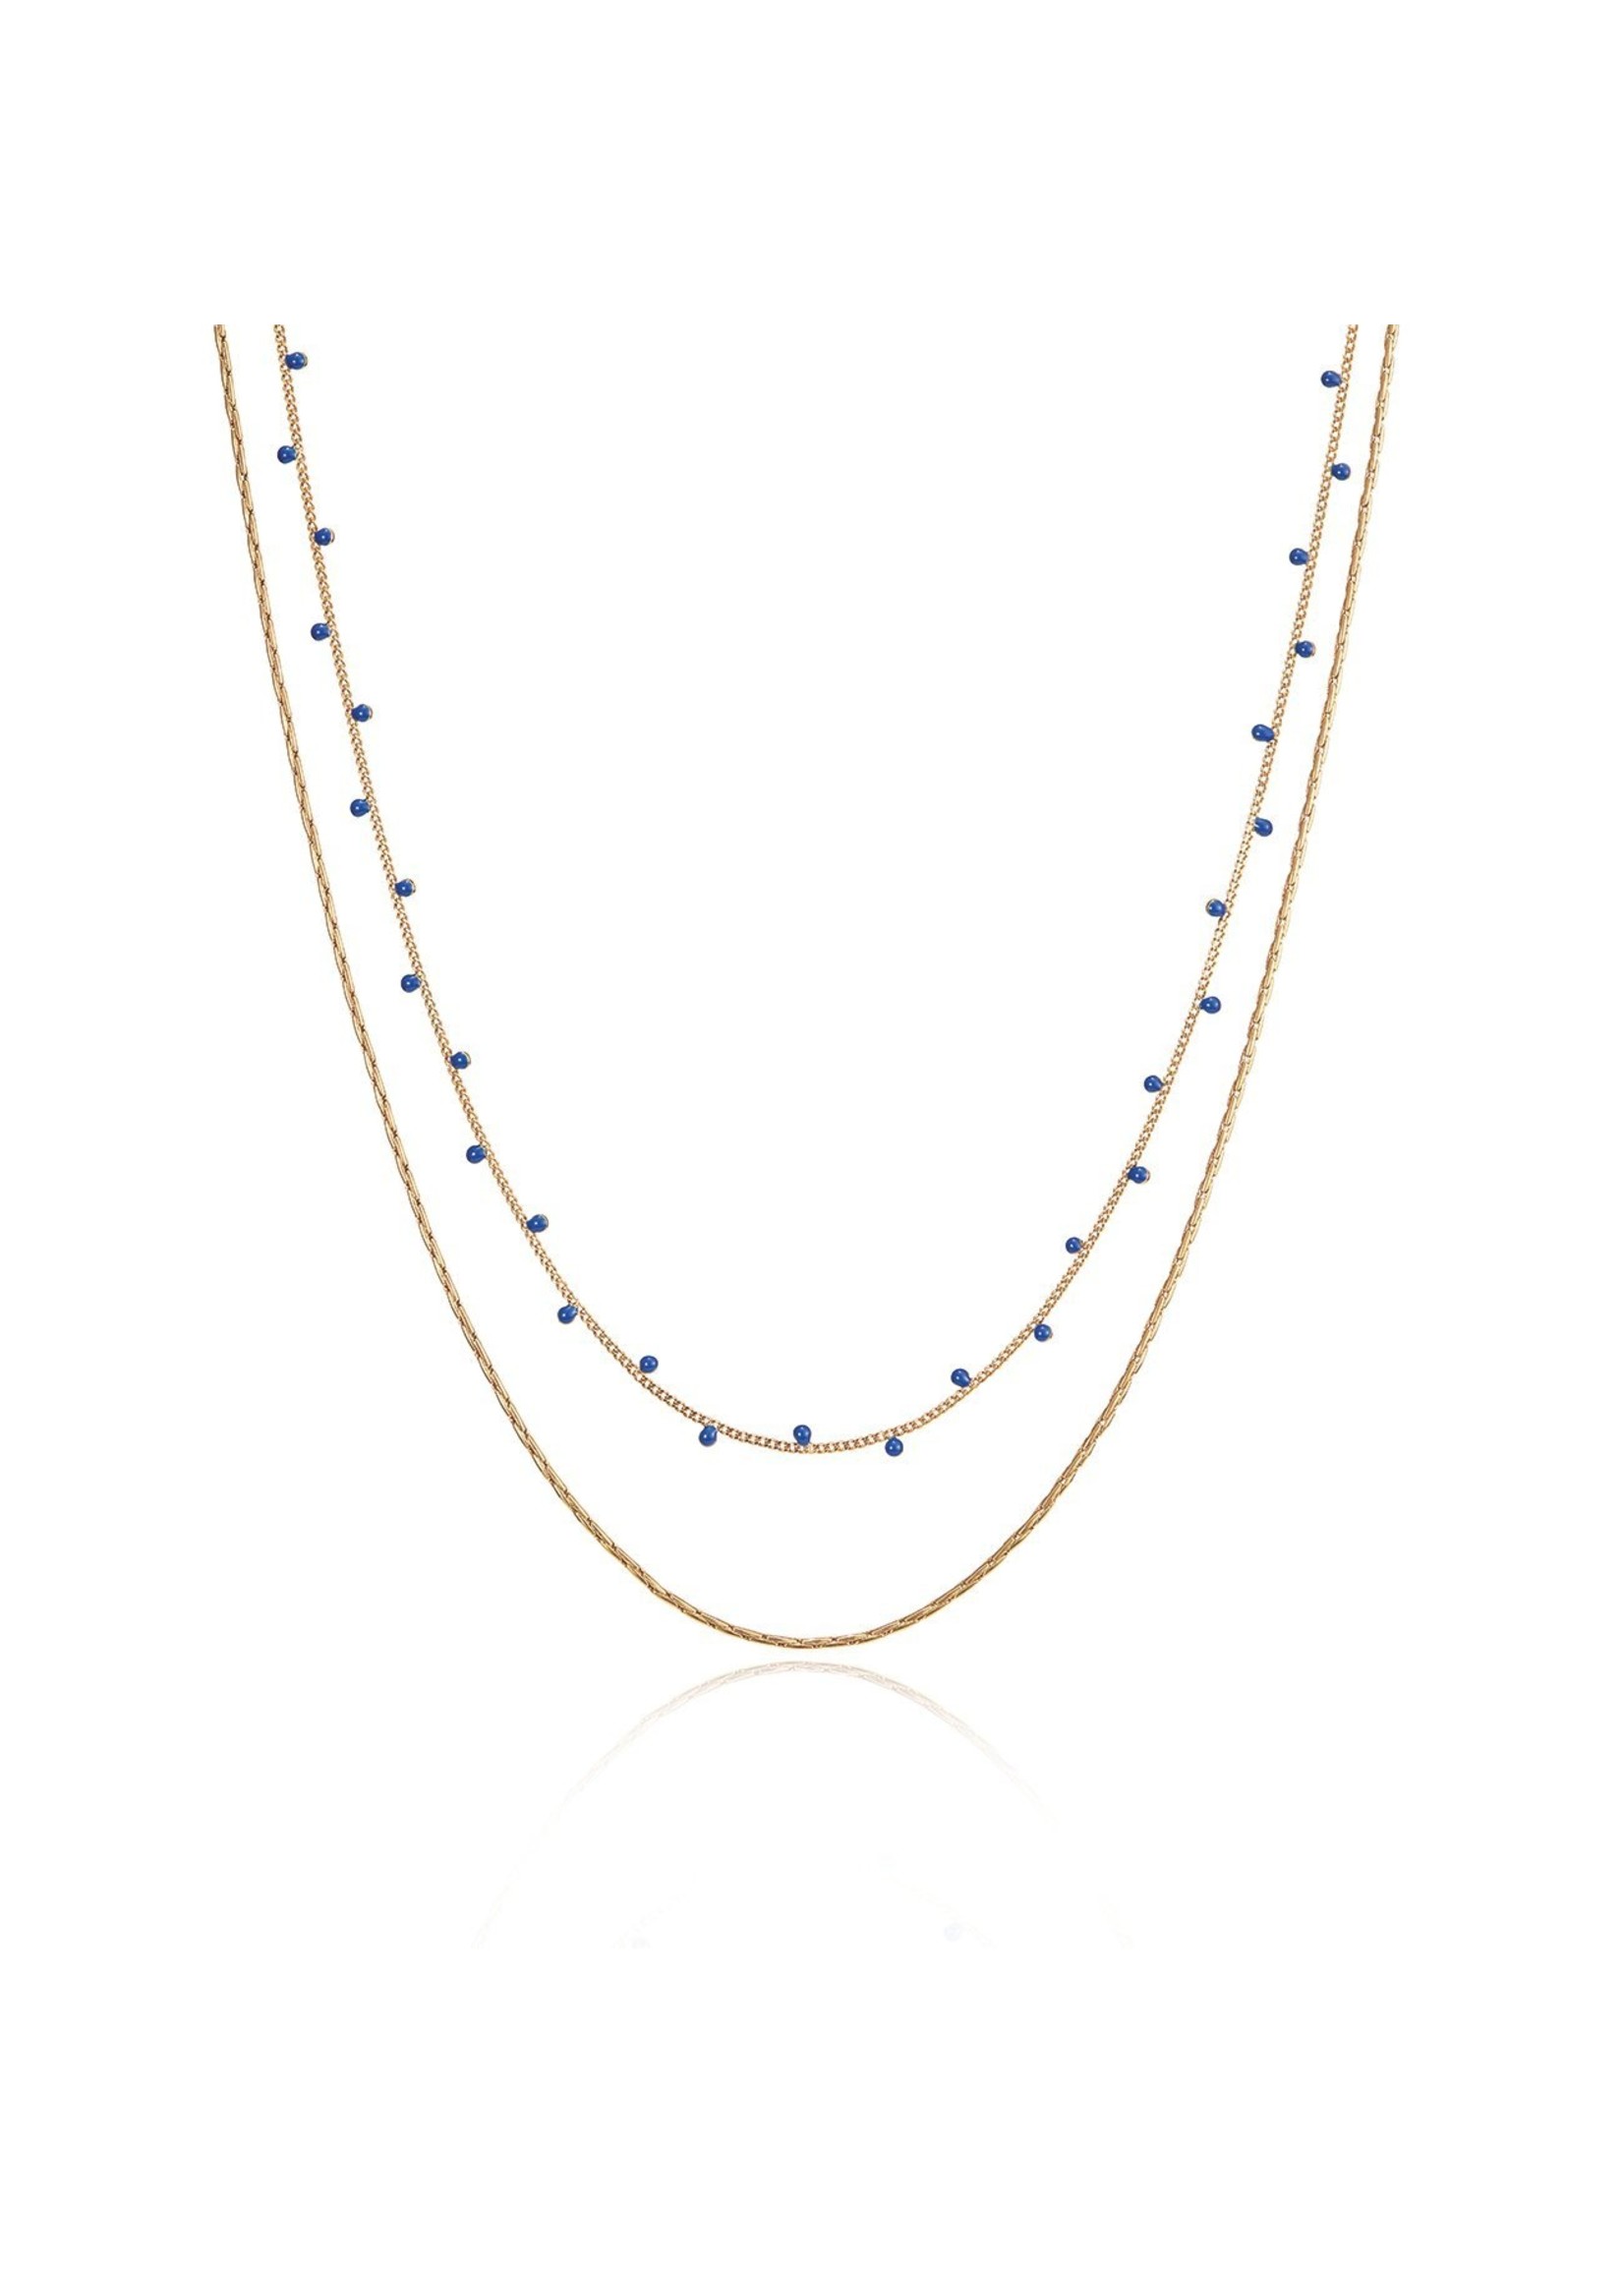 Jenny Bird Modri Double Strand Necklace